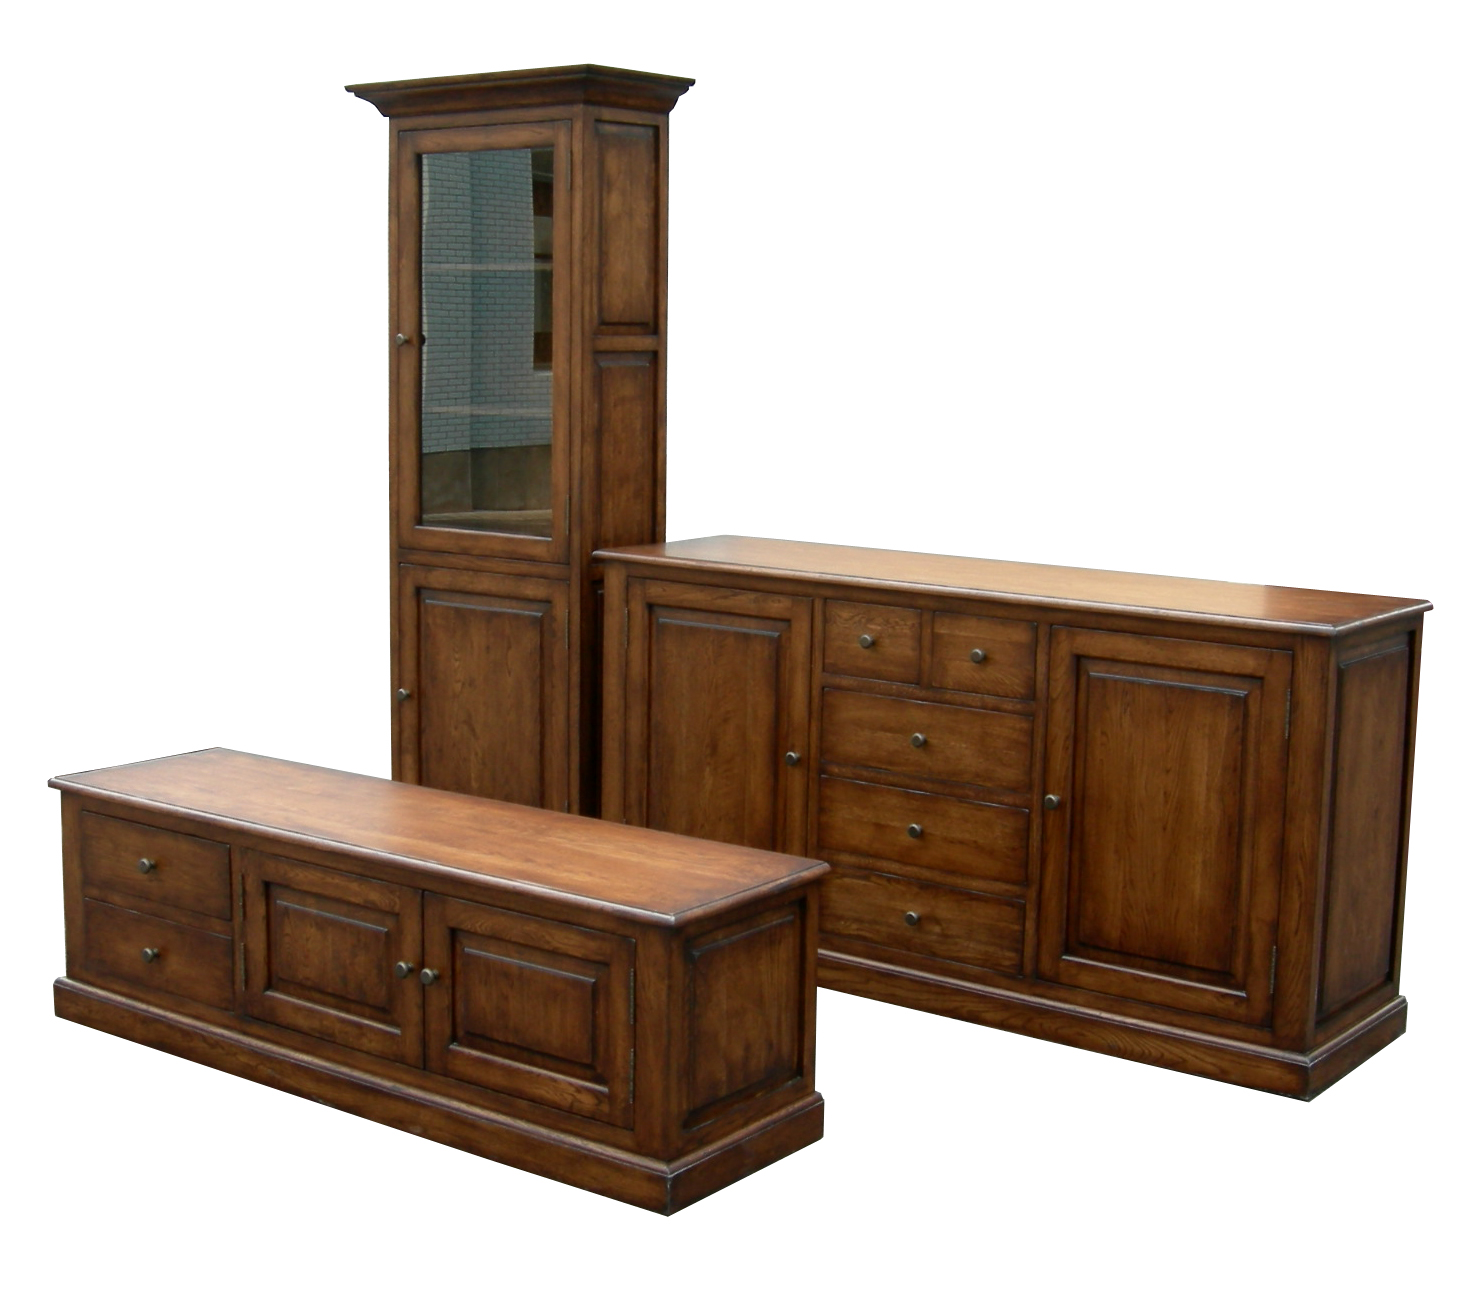 Wooden Furniture Designs - Wooden Furniture shops in ...